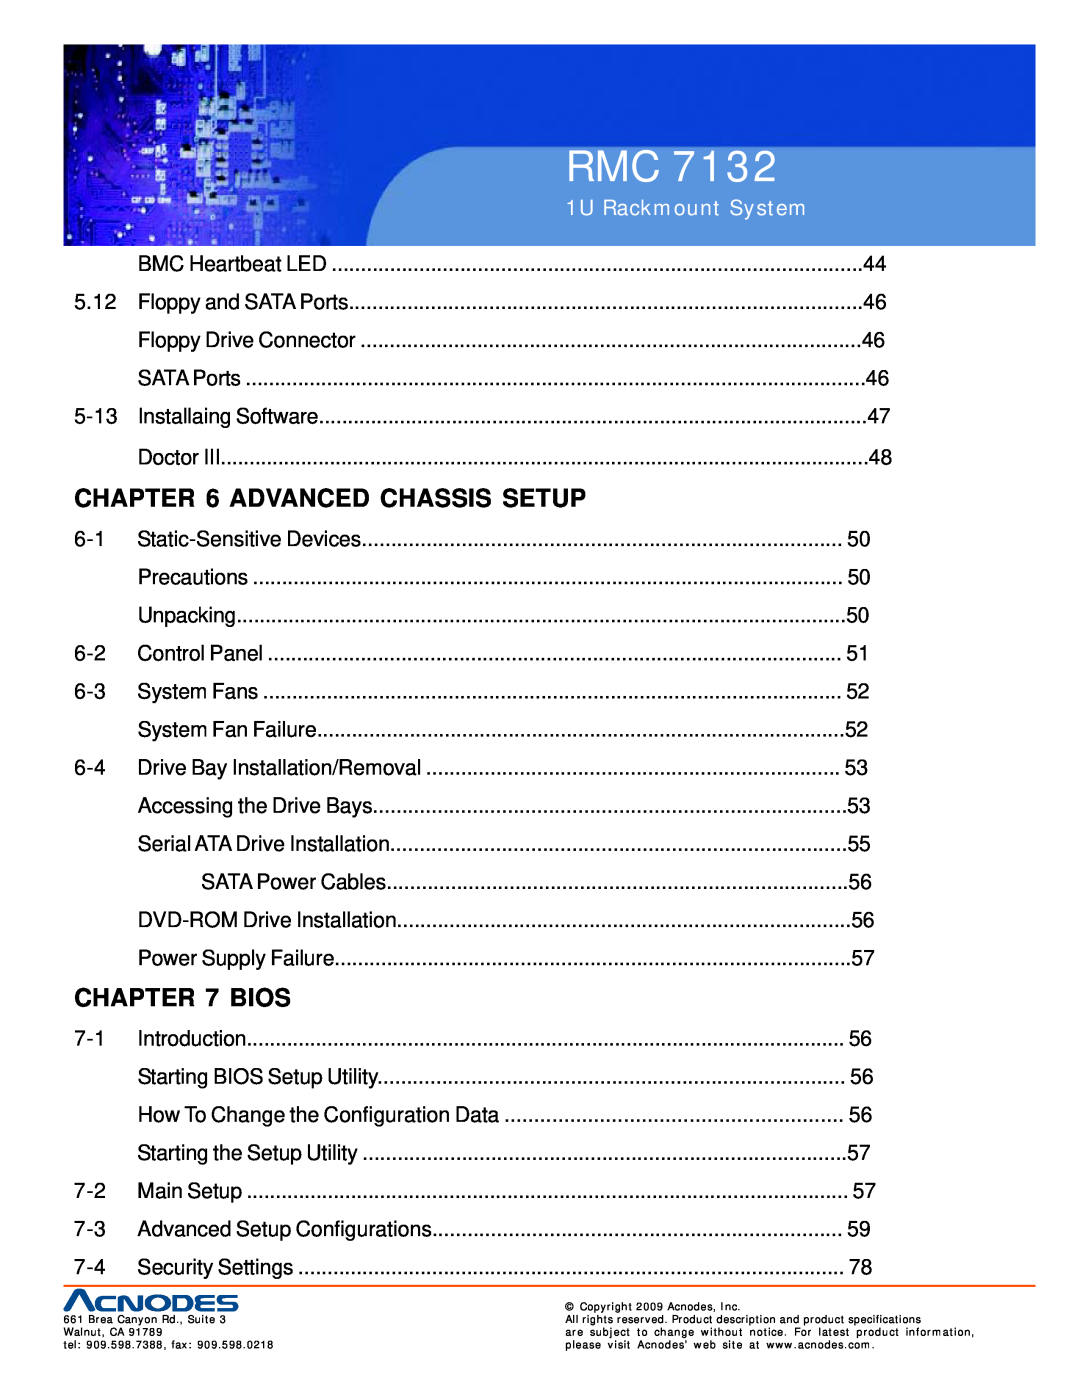 Acnodes RMC 7132 user manual Advanced Chassis Setup, Bios, 1U Rackmount System 